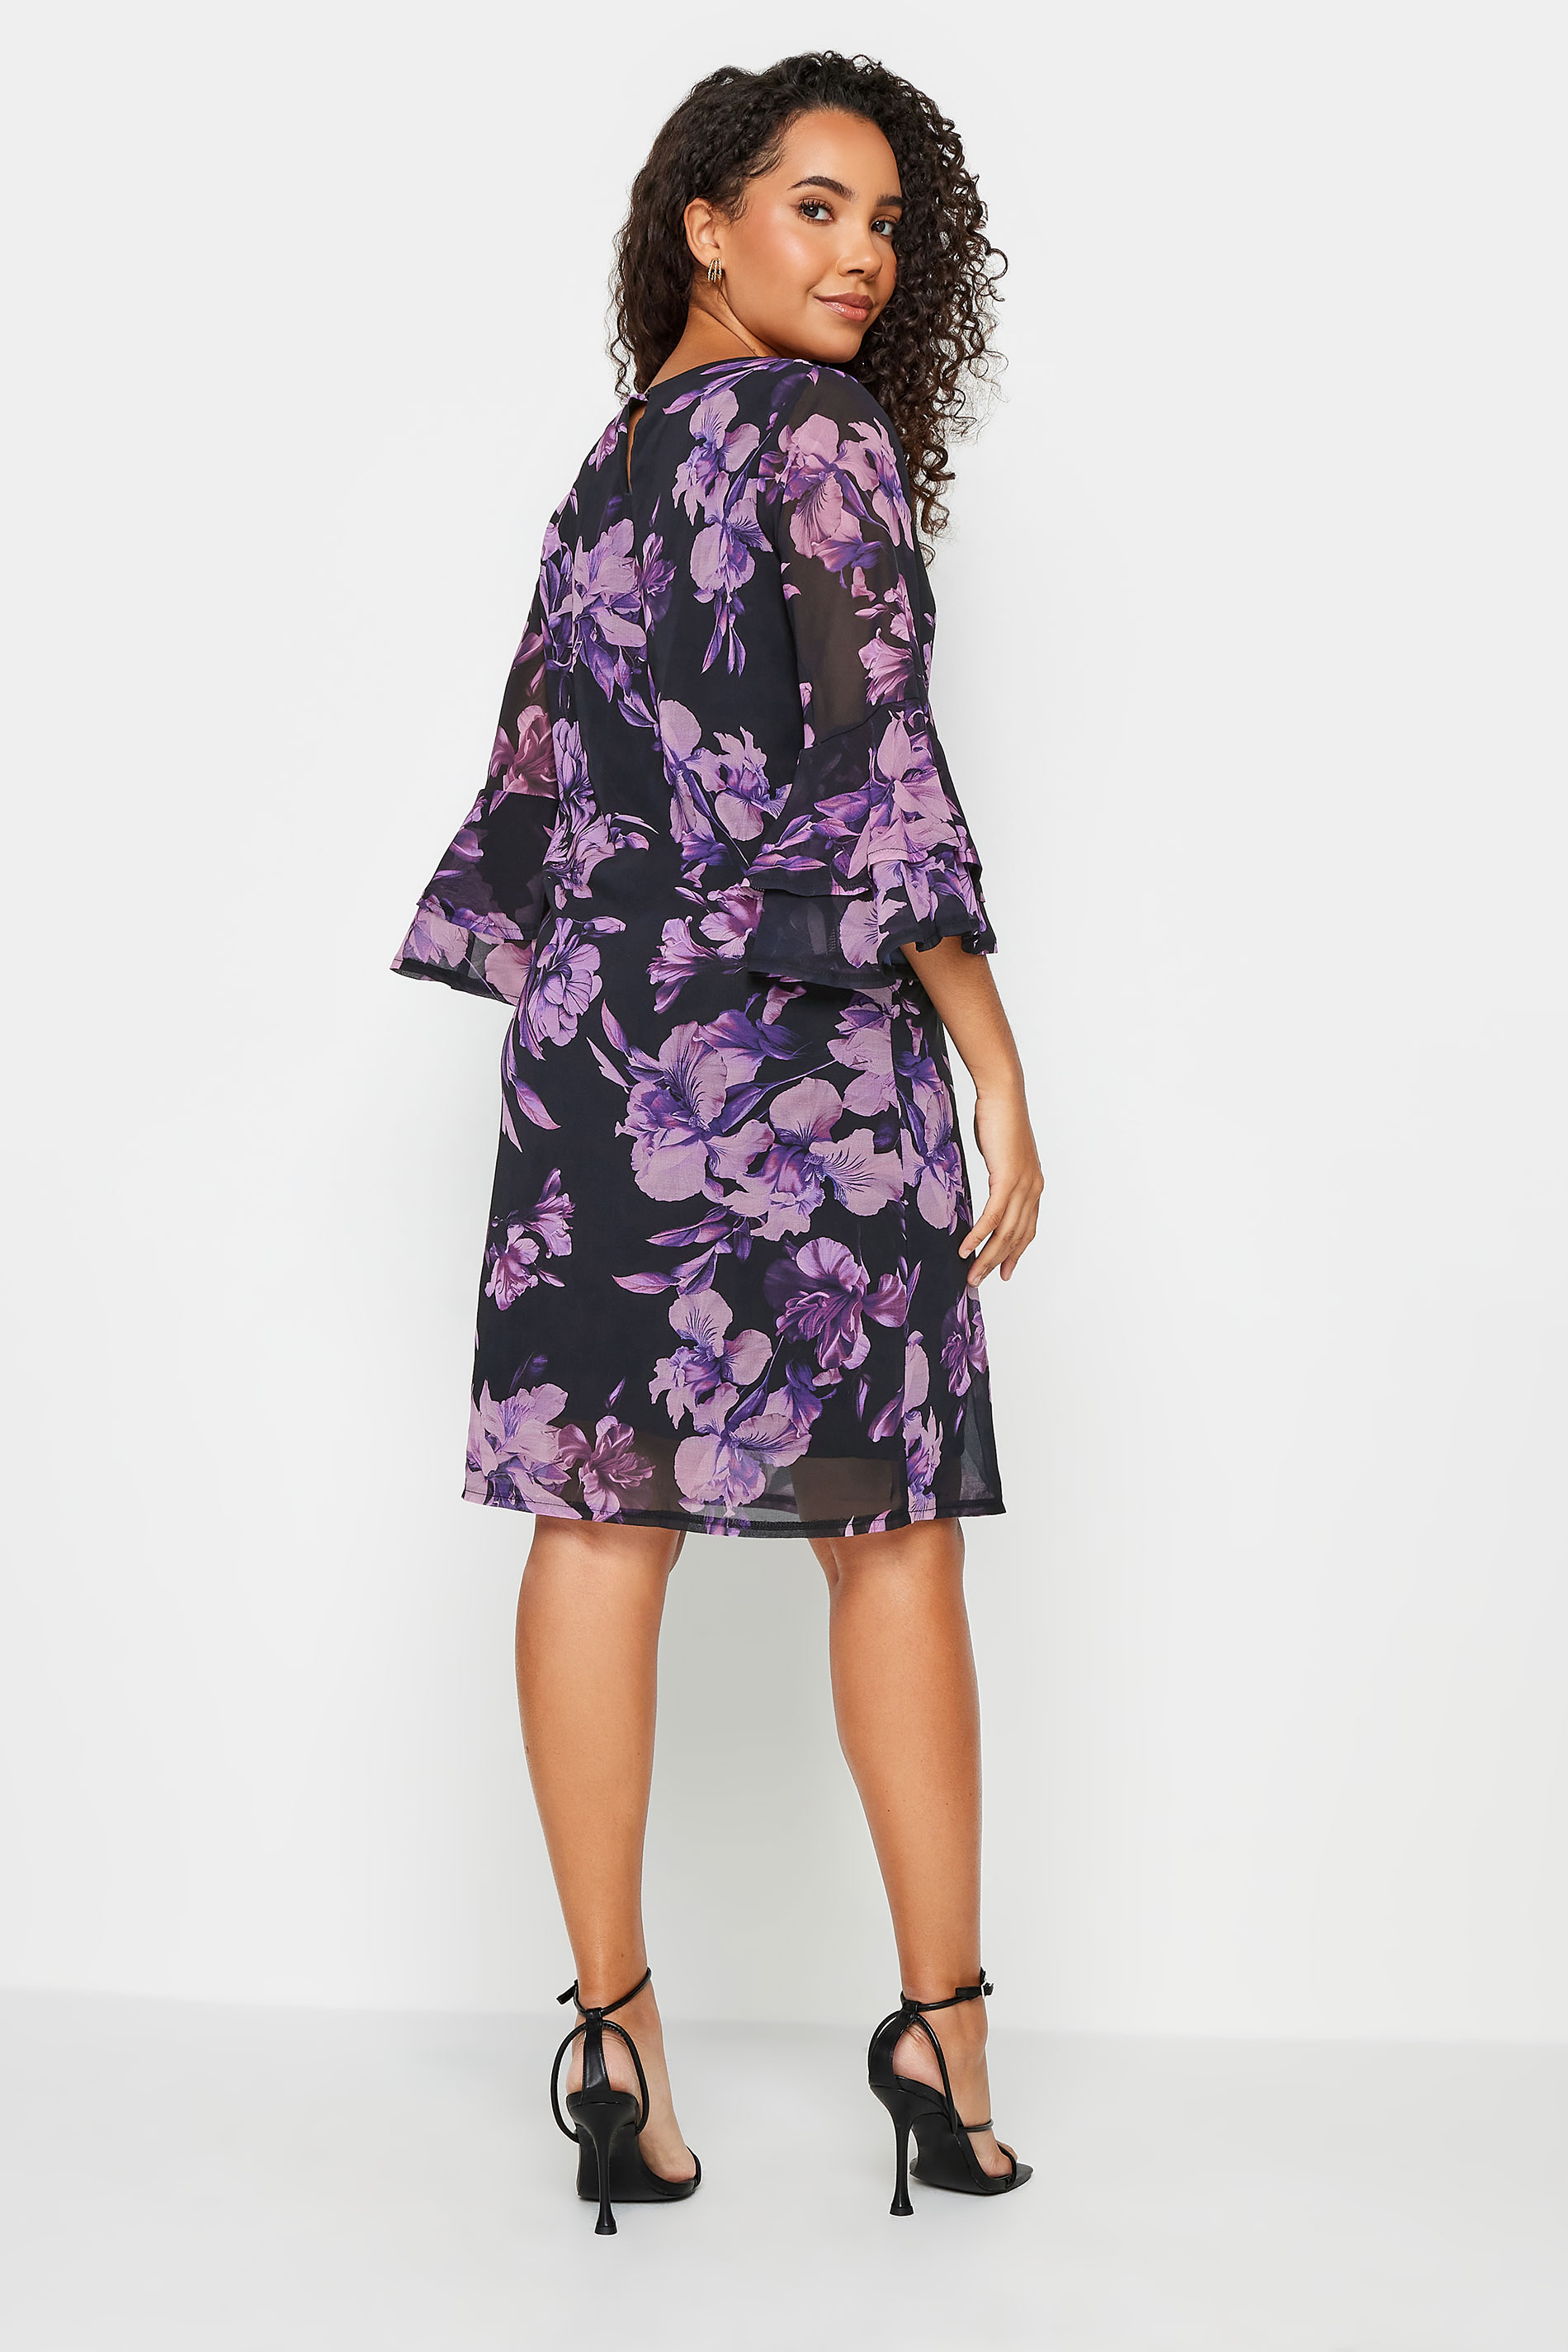 M&Co Black & Pink Floral Print Flute Sleeve Shift Dress | M&Co 3